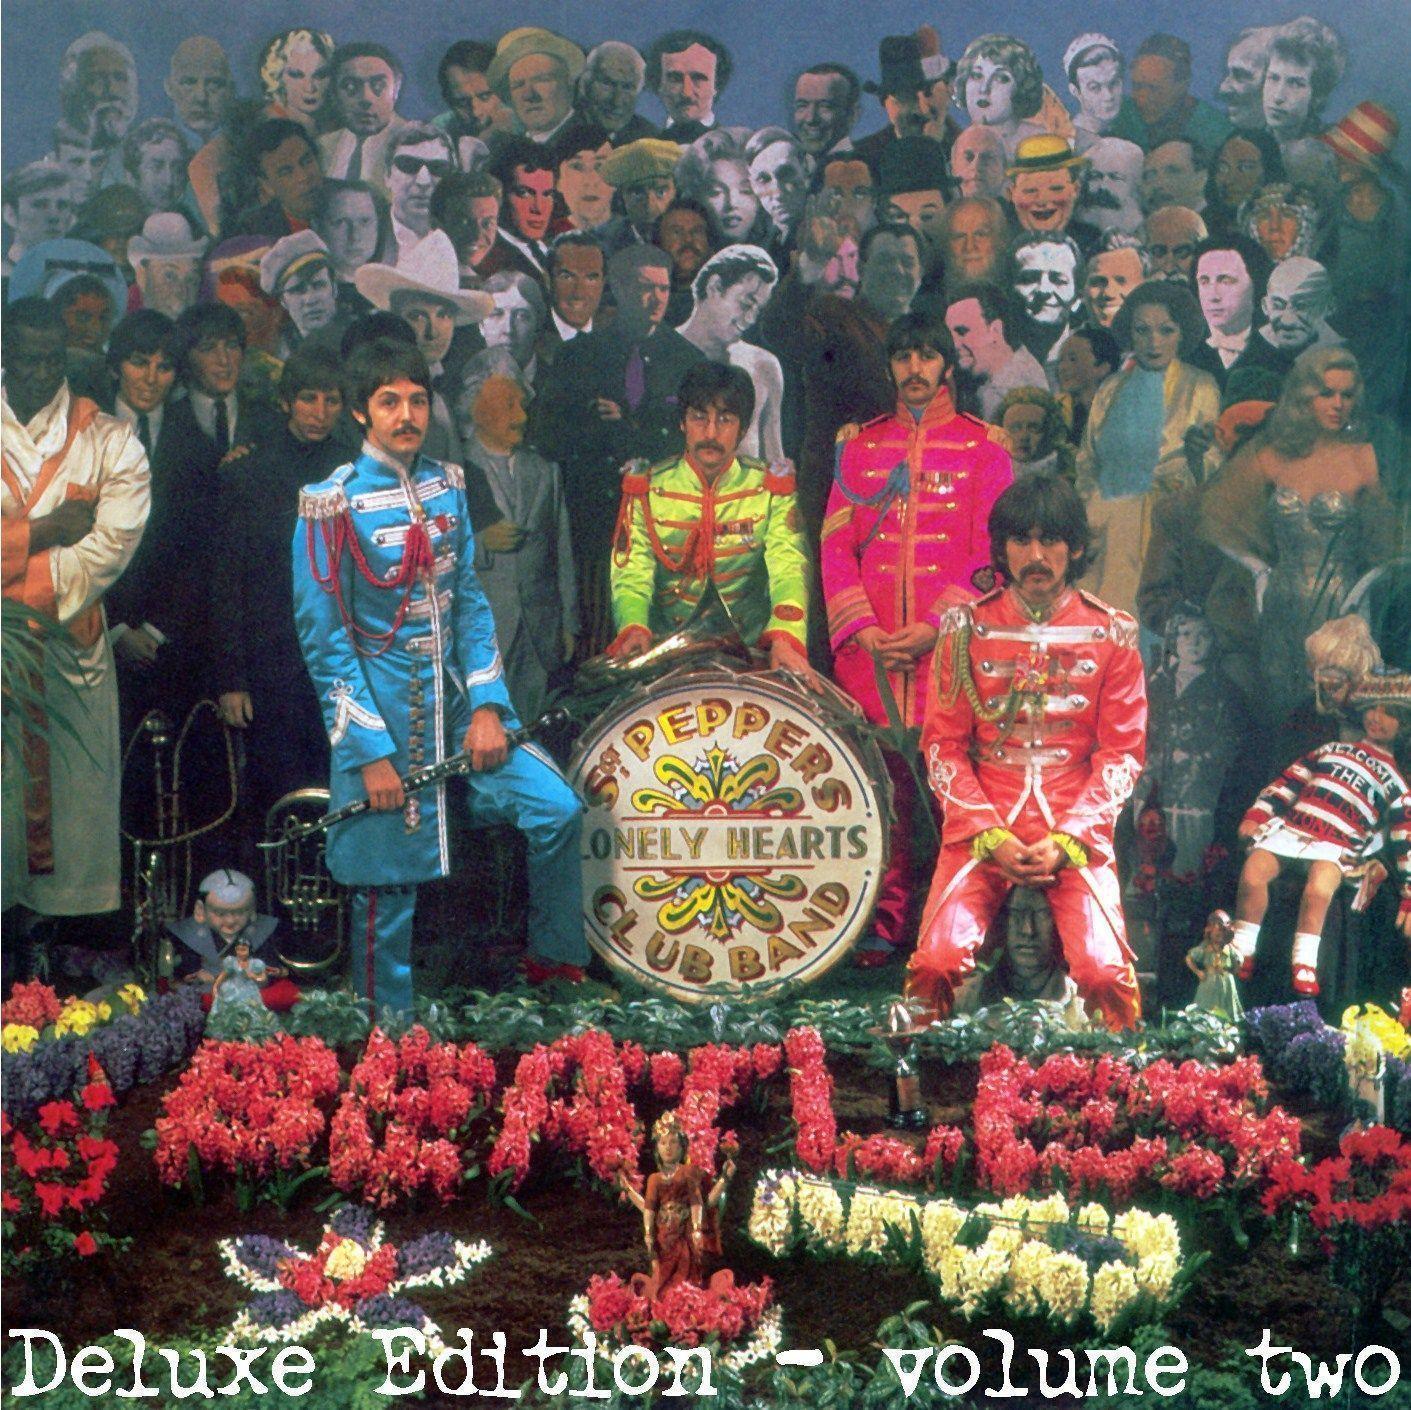 The Beatles Wallpaper Sgt Pepper. Free Download Wallpaper